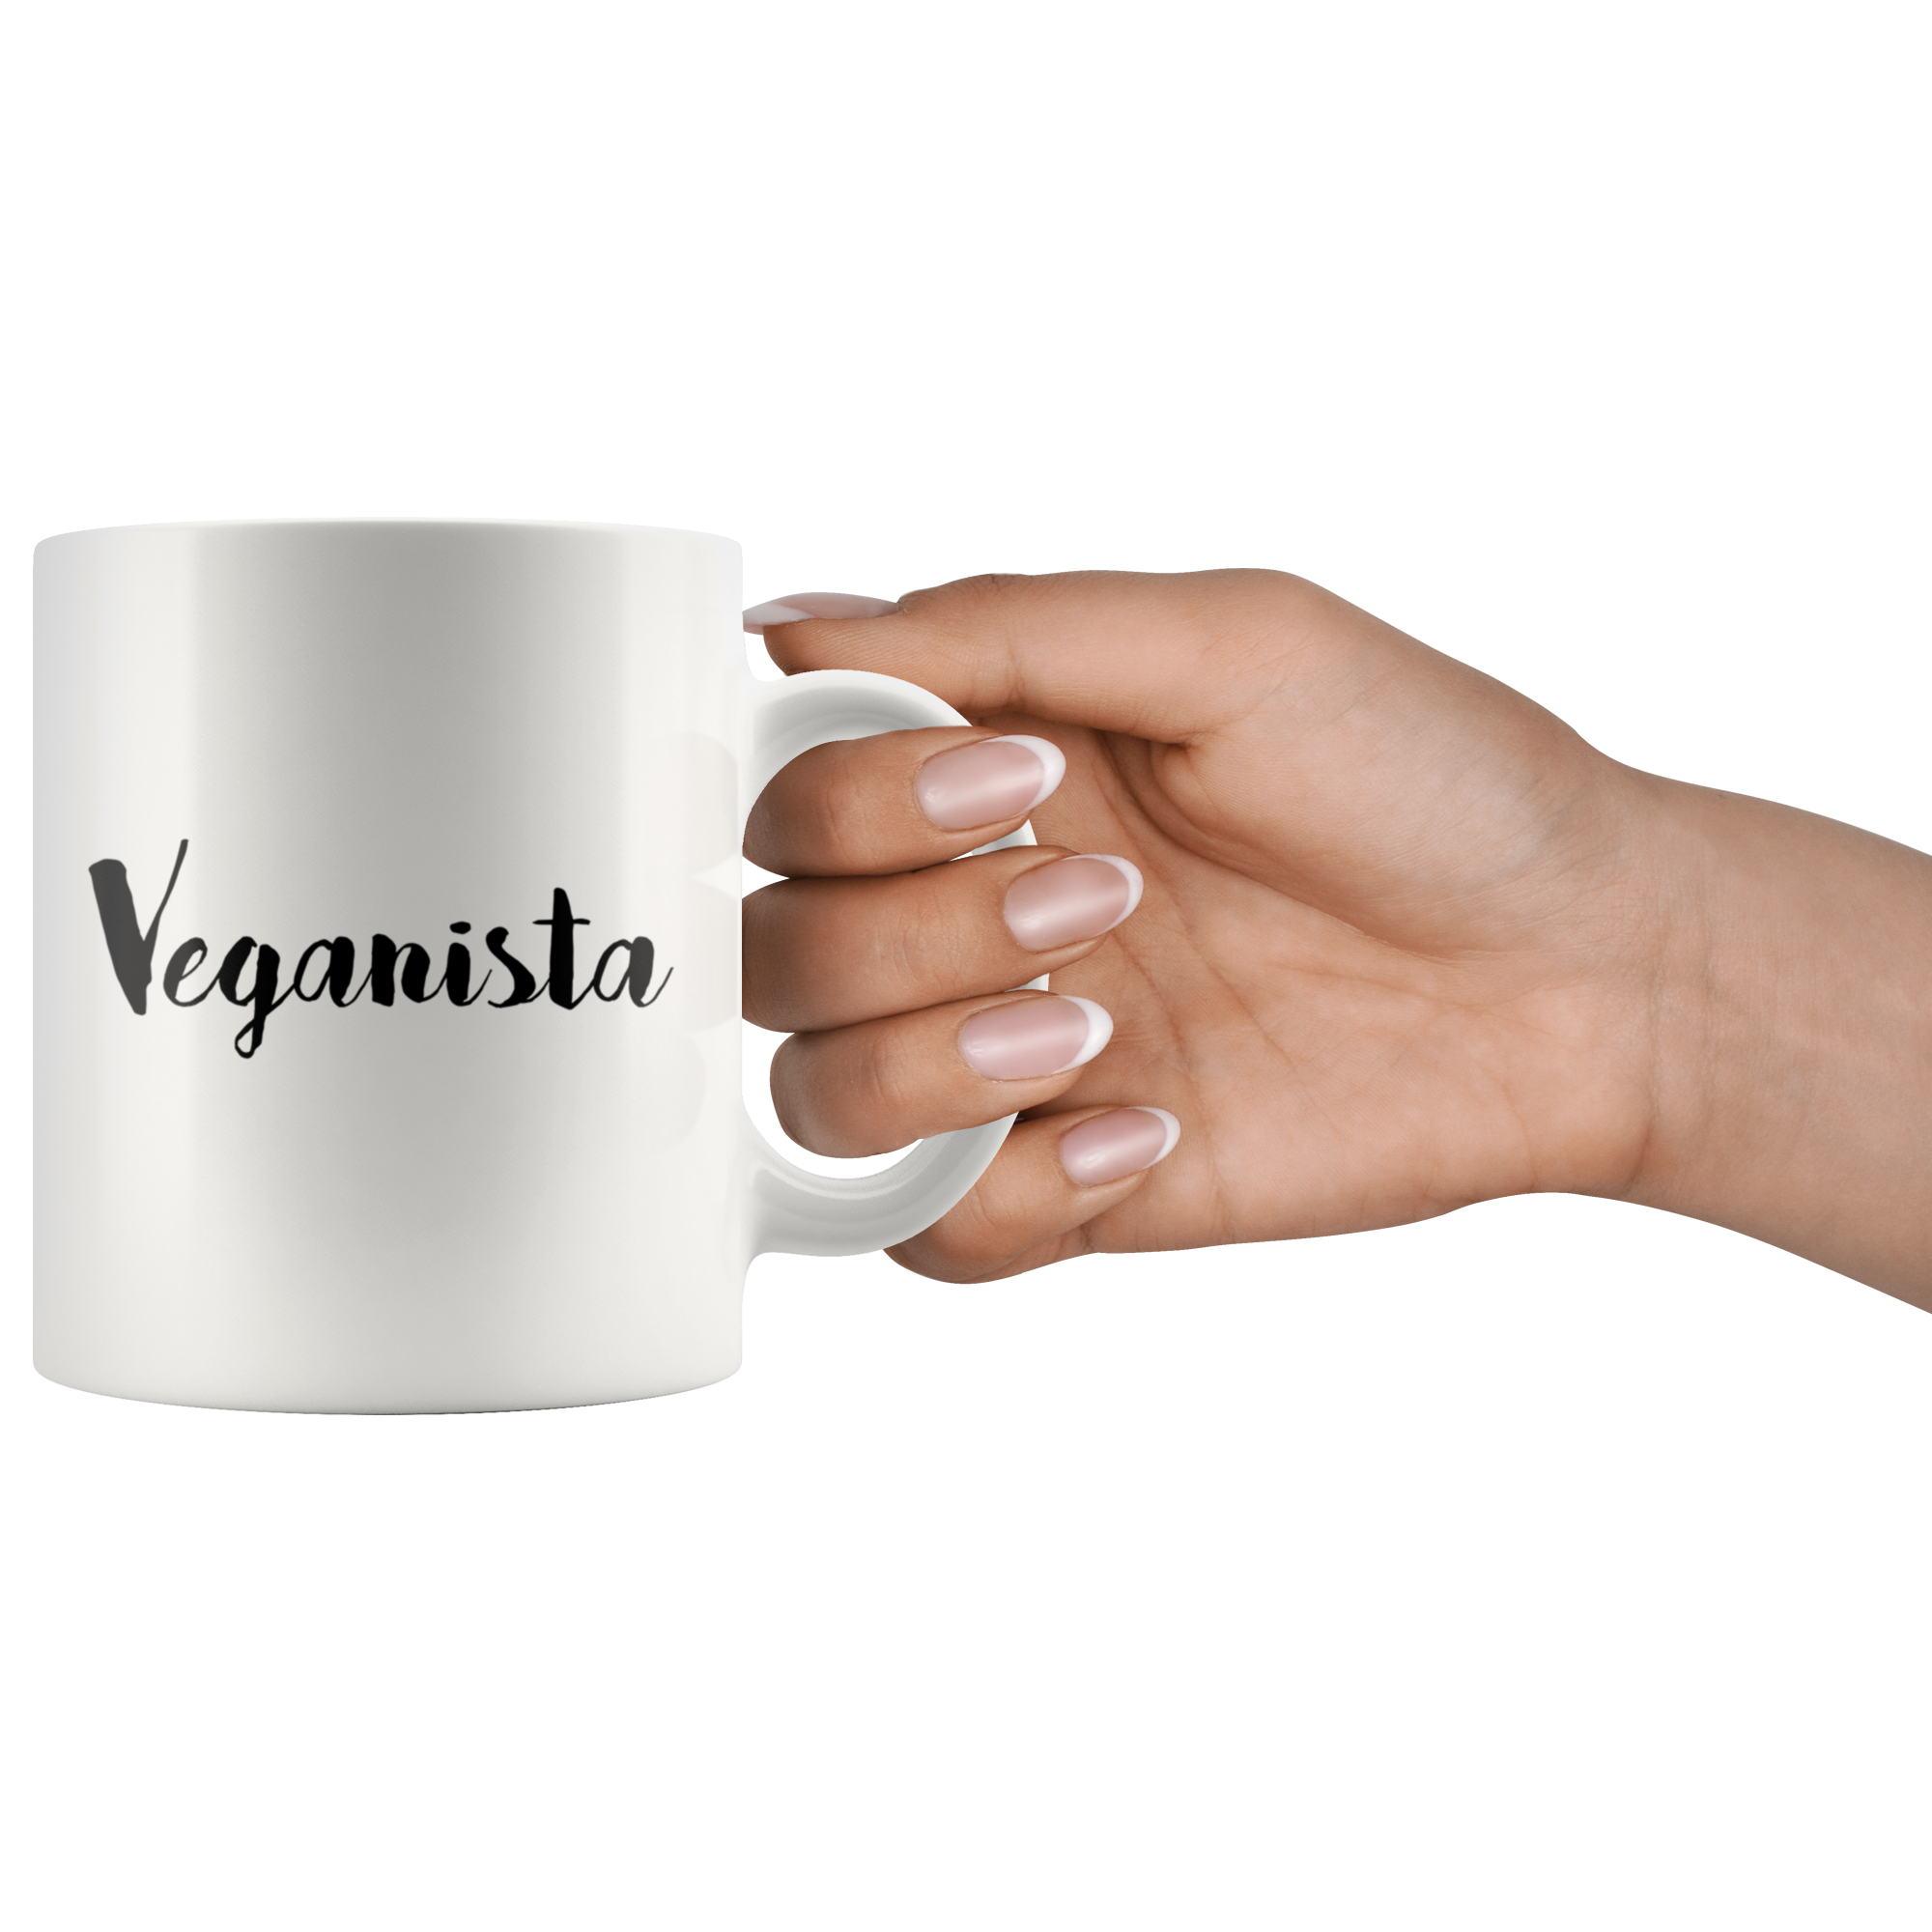 Veganista mug - Guestbookery